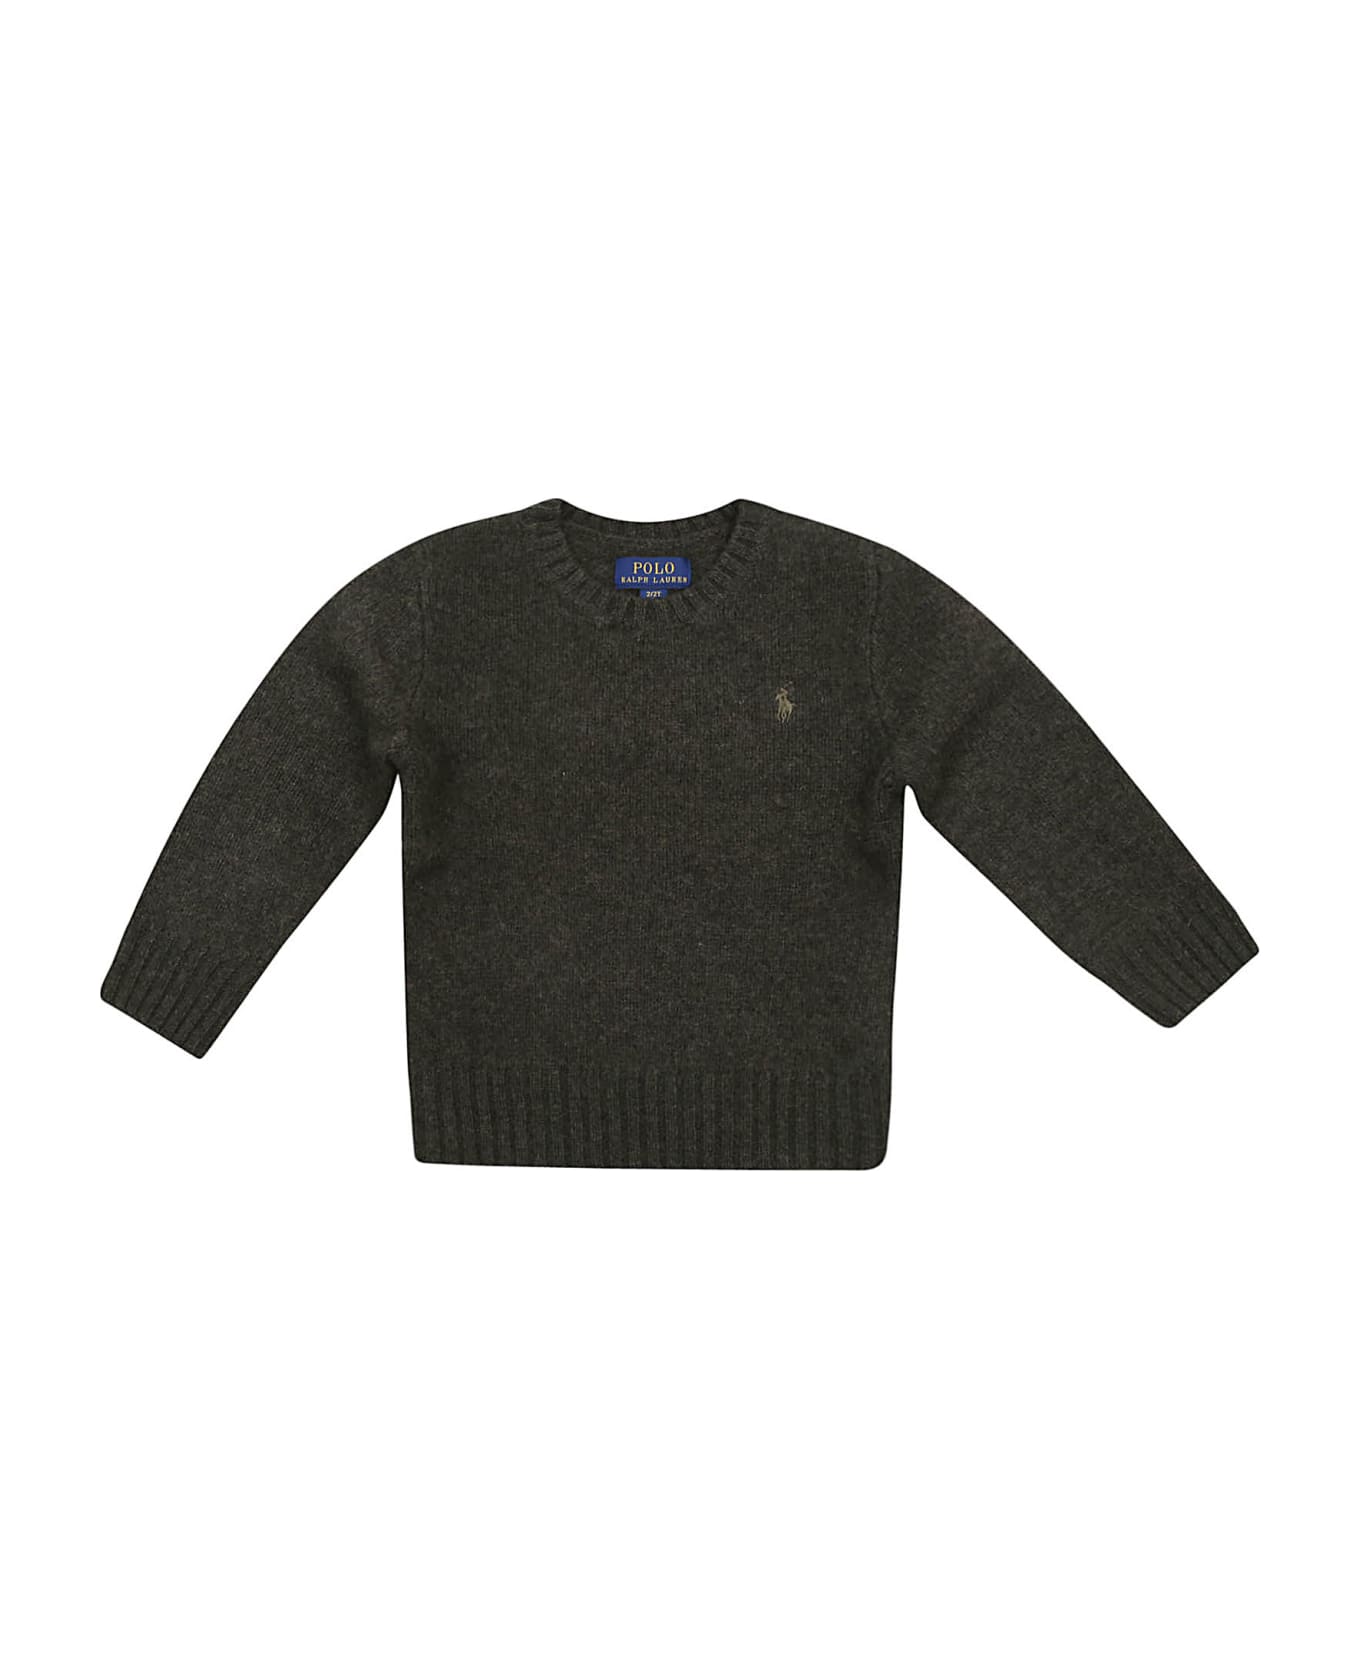 Ralph Lauren Ls Cn-sweater-pullover - Olive Heather